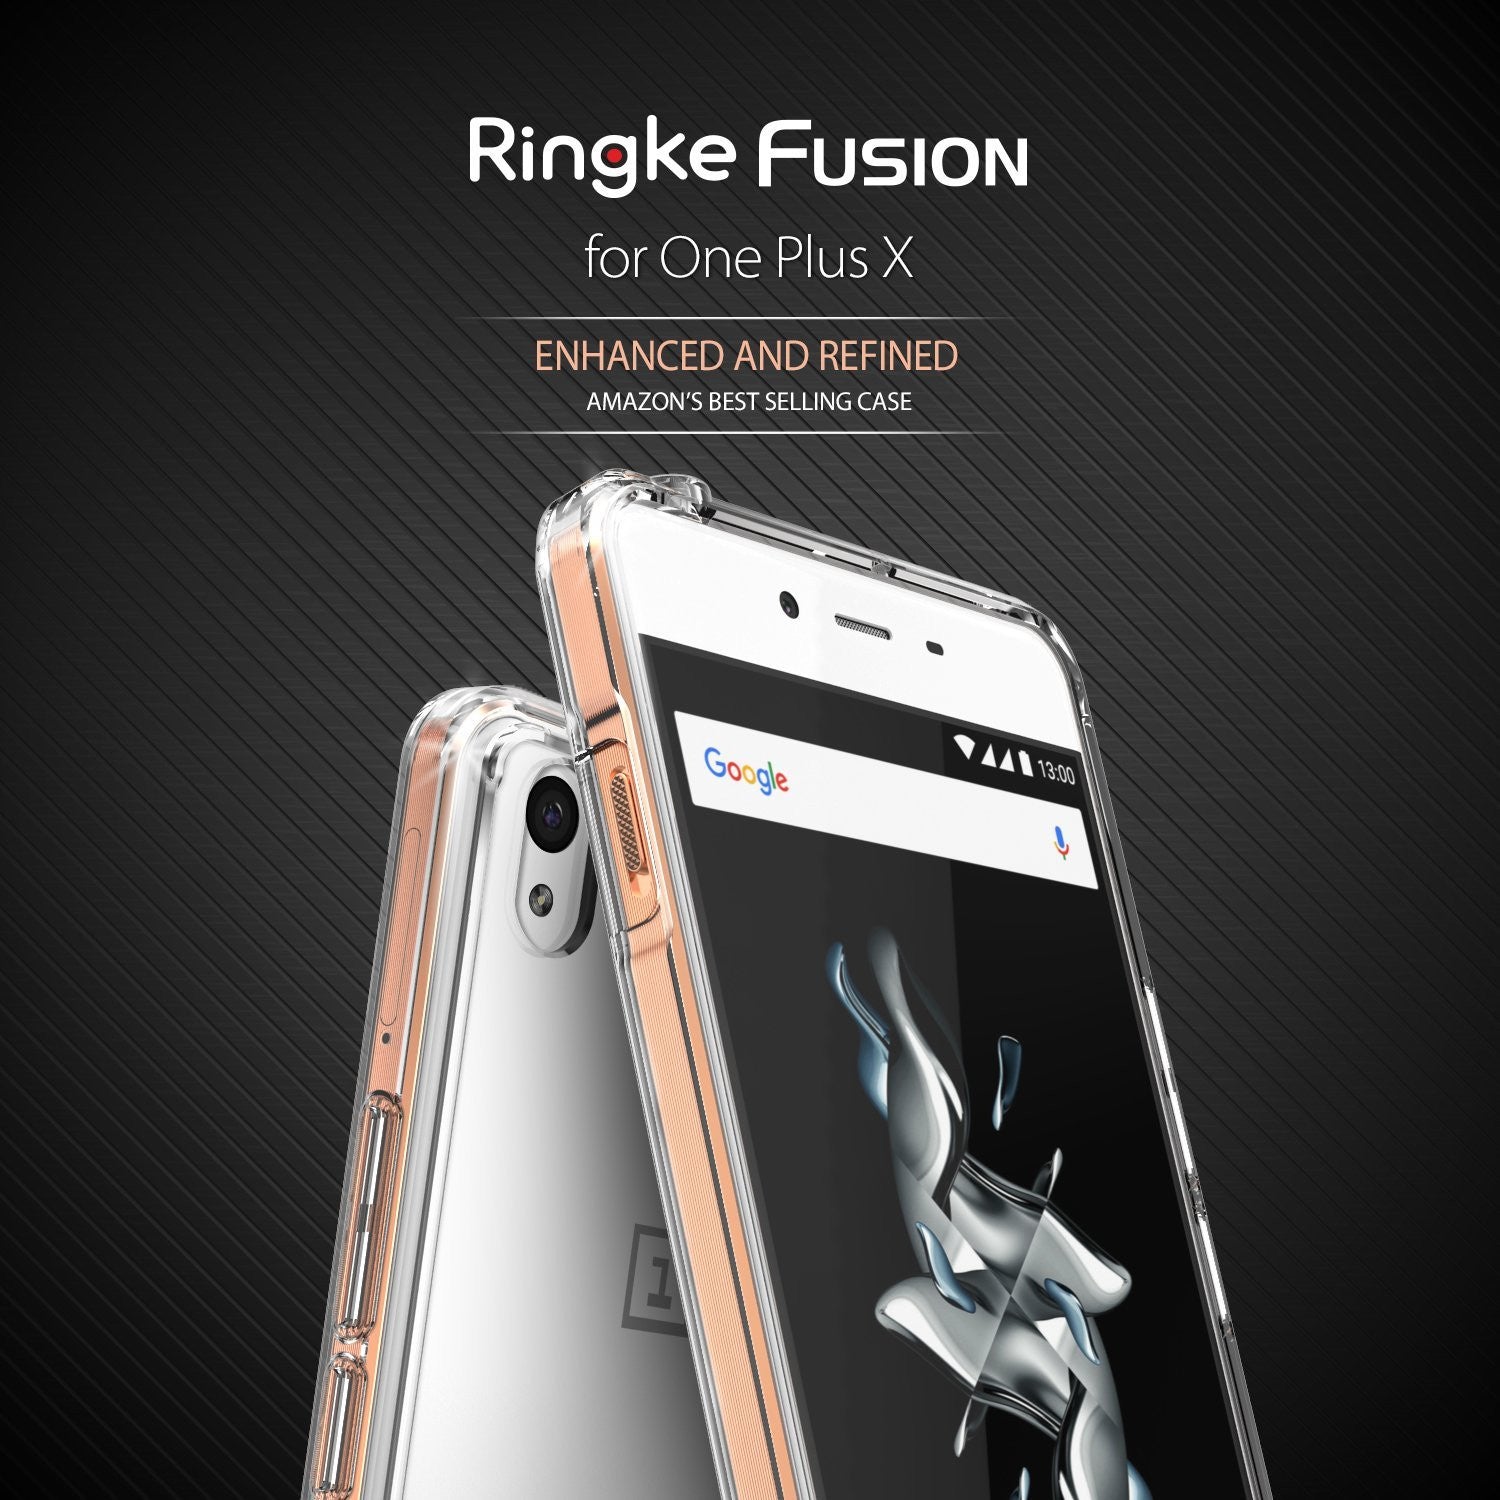 oneplus x case, ringke fusion case crystal clear pc back tpu bumper case